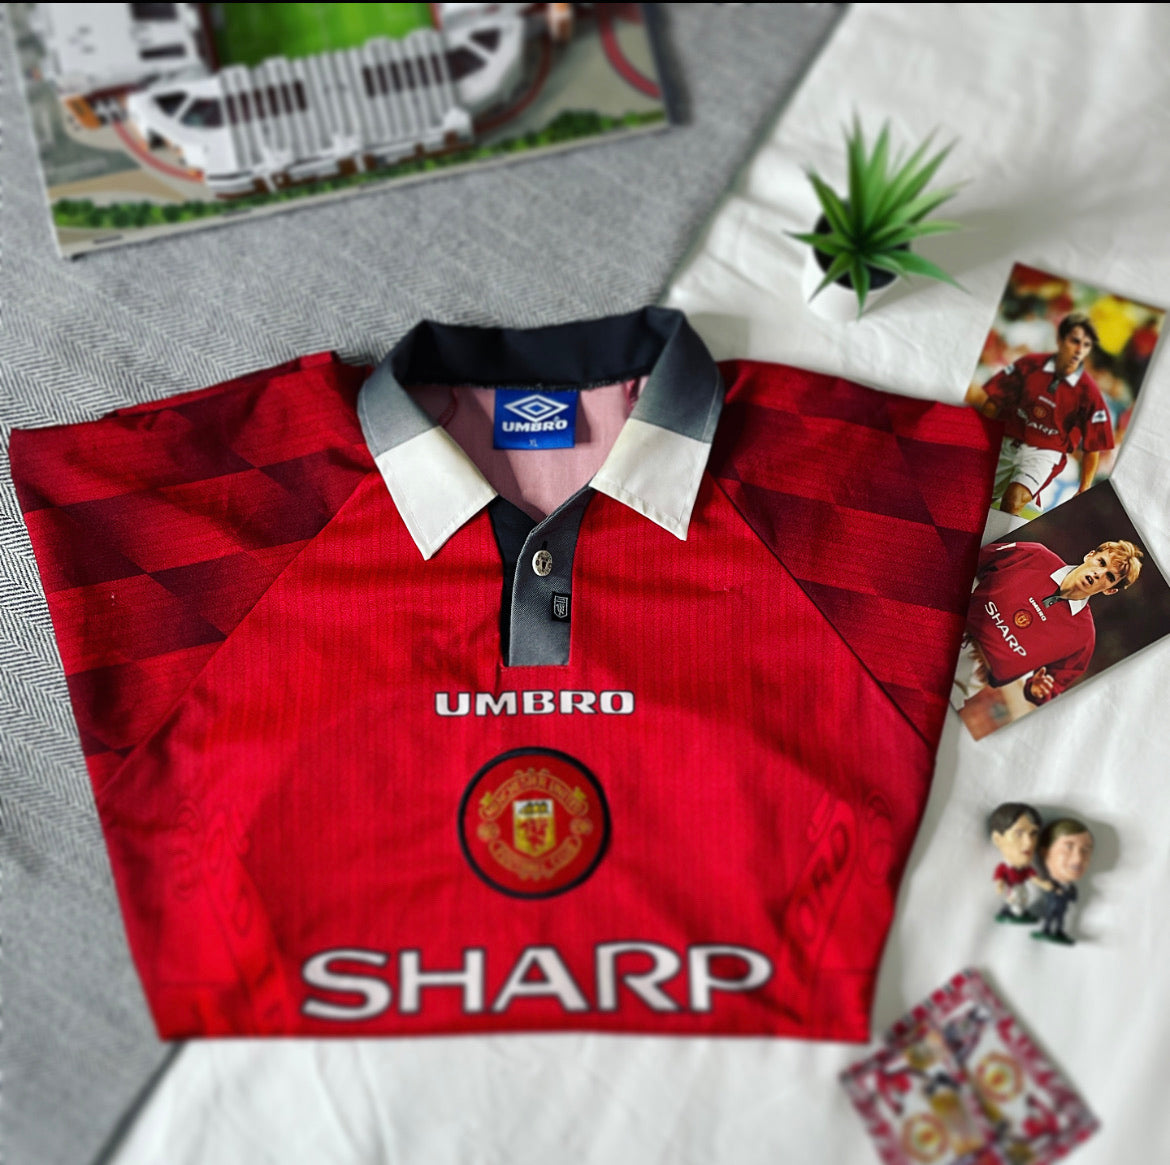 1996-98 Manchester United Home Shirt | Cantona #7 | Very Good | L